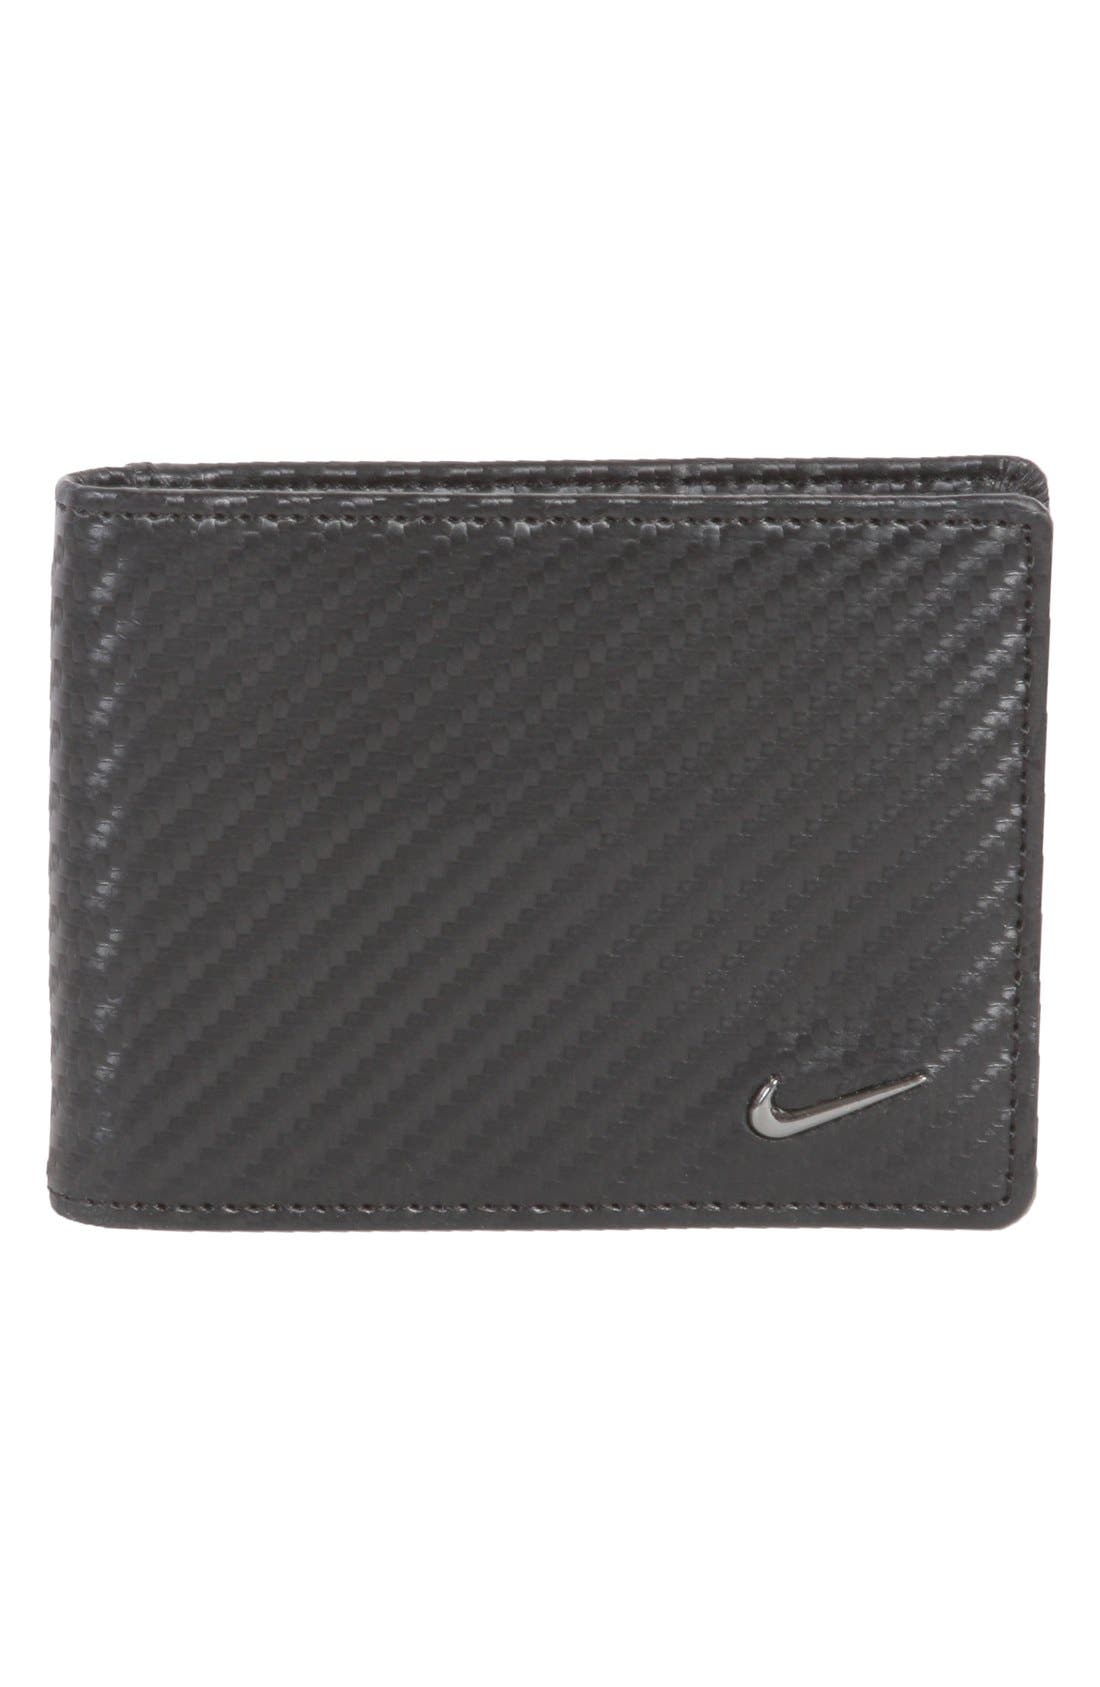 Nike Leather Money Clip Wallet | Nordstrom